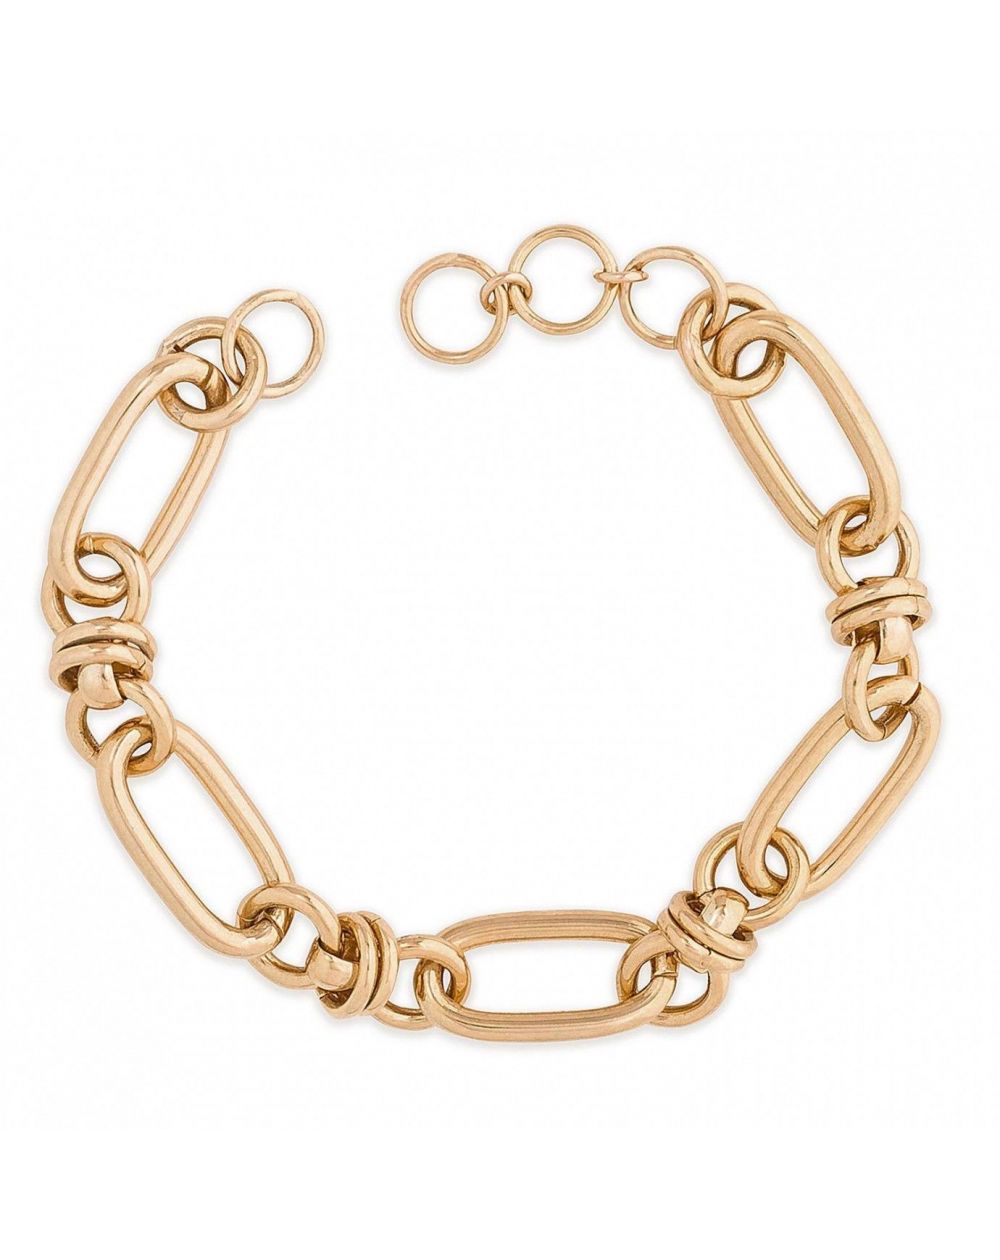 Bracelet Clare Gold 05